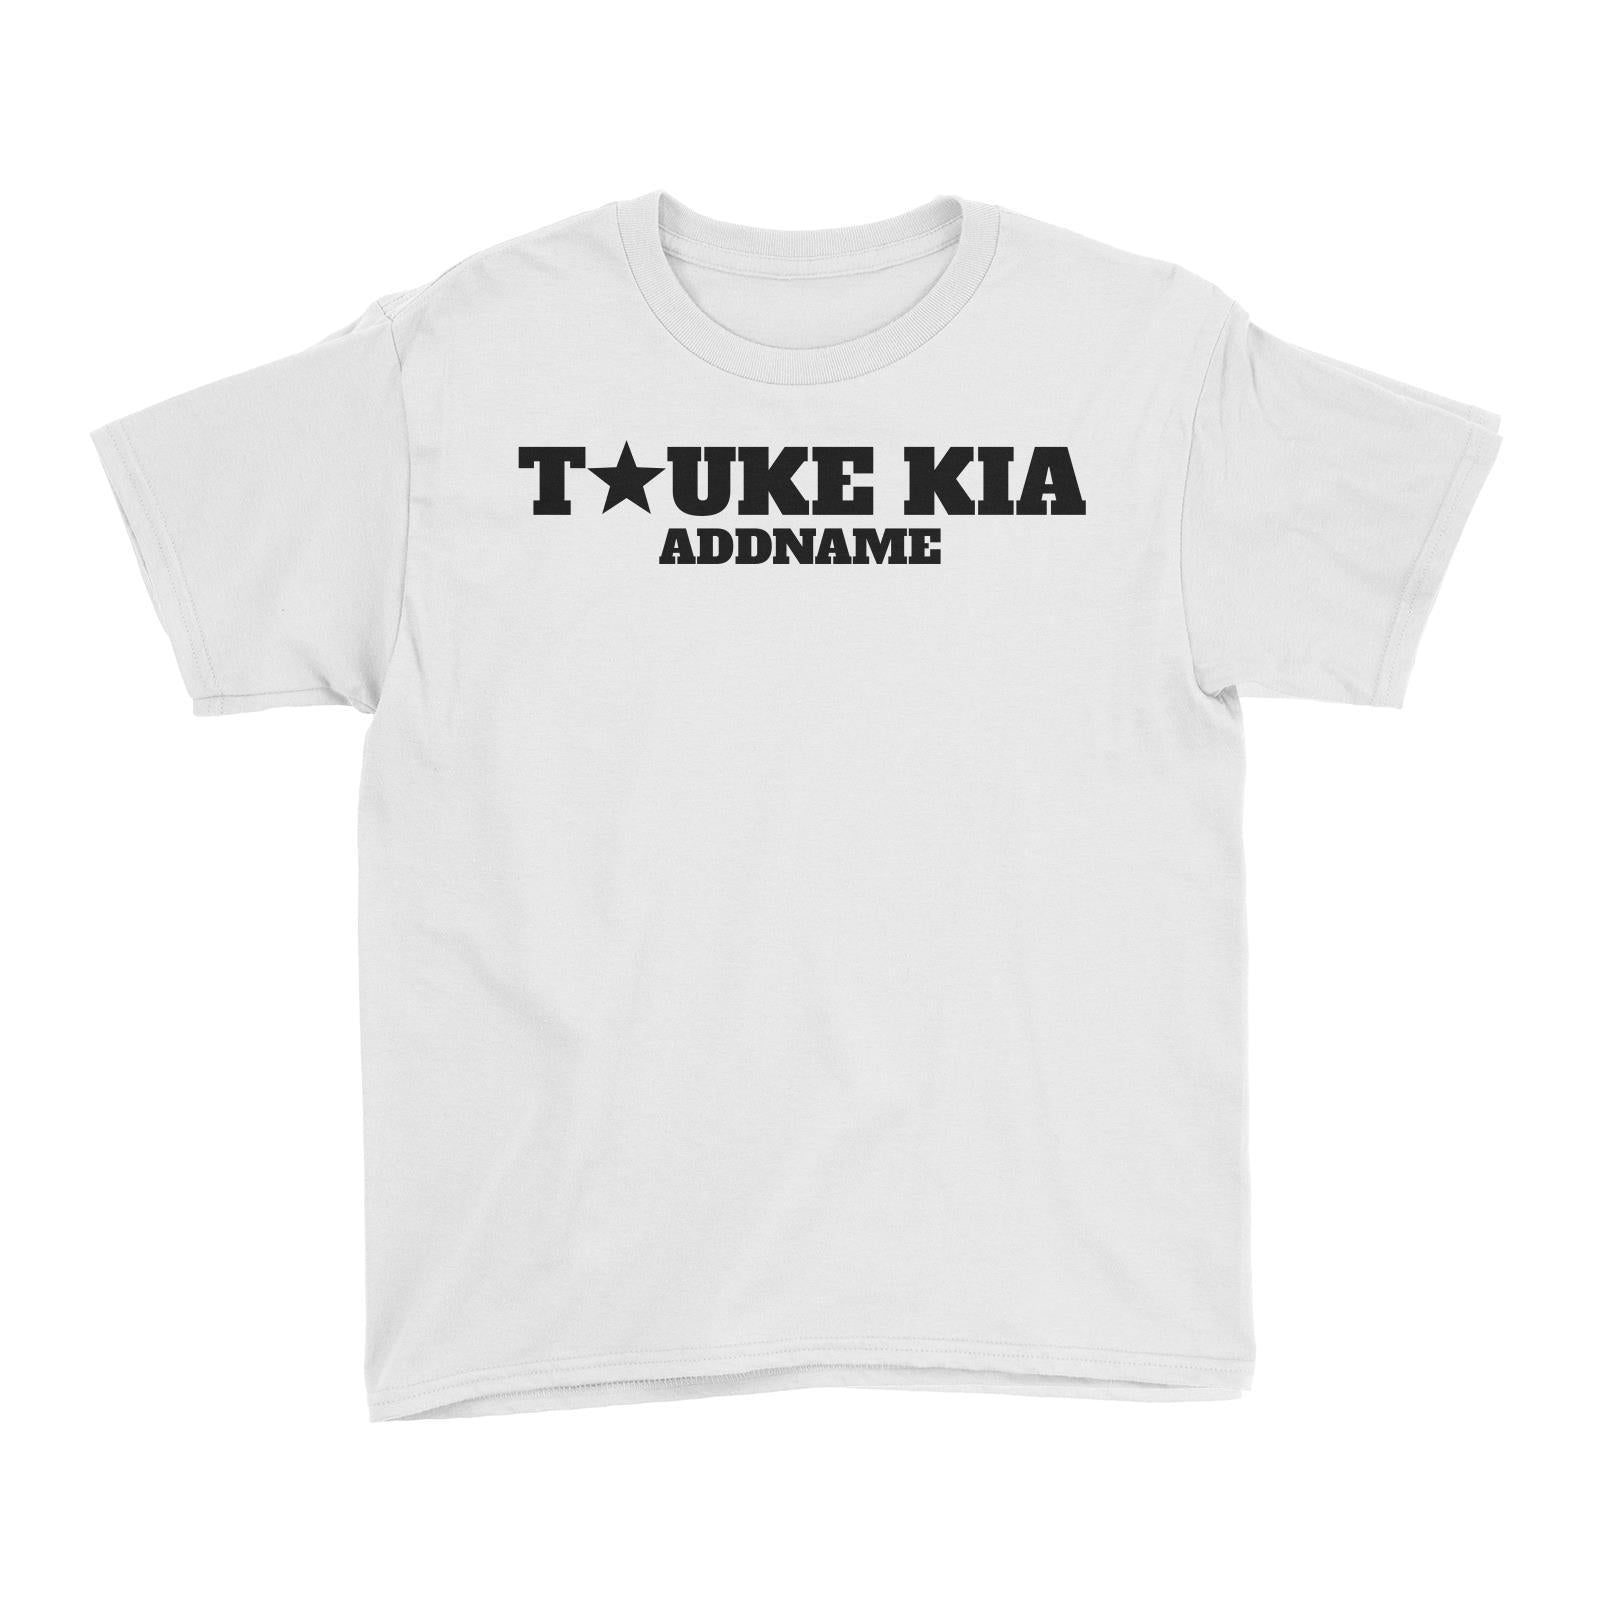 Tauke Kia Star Kid's T-Shirt